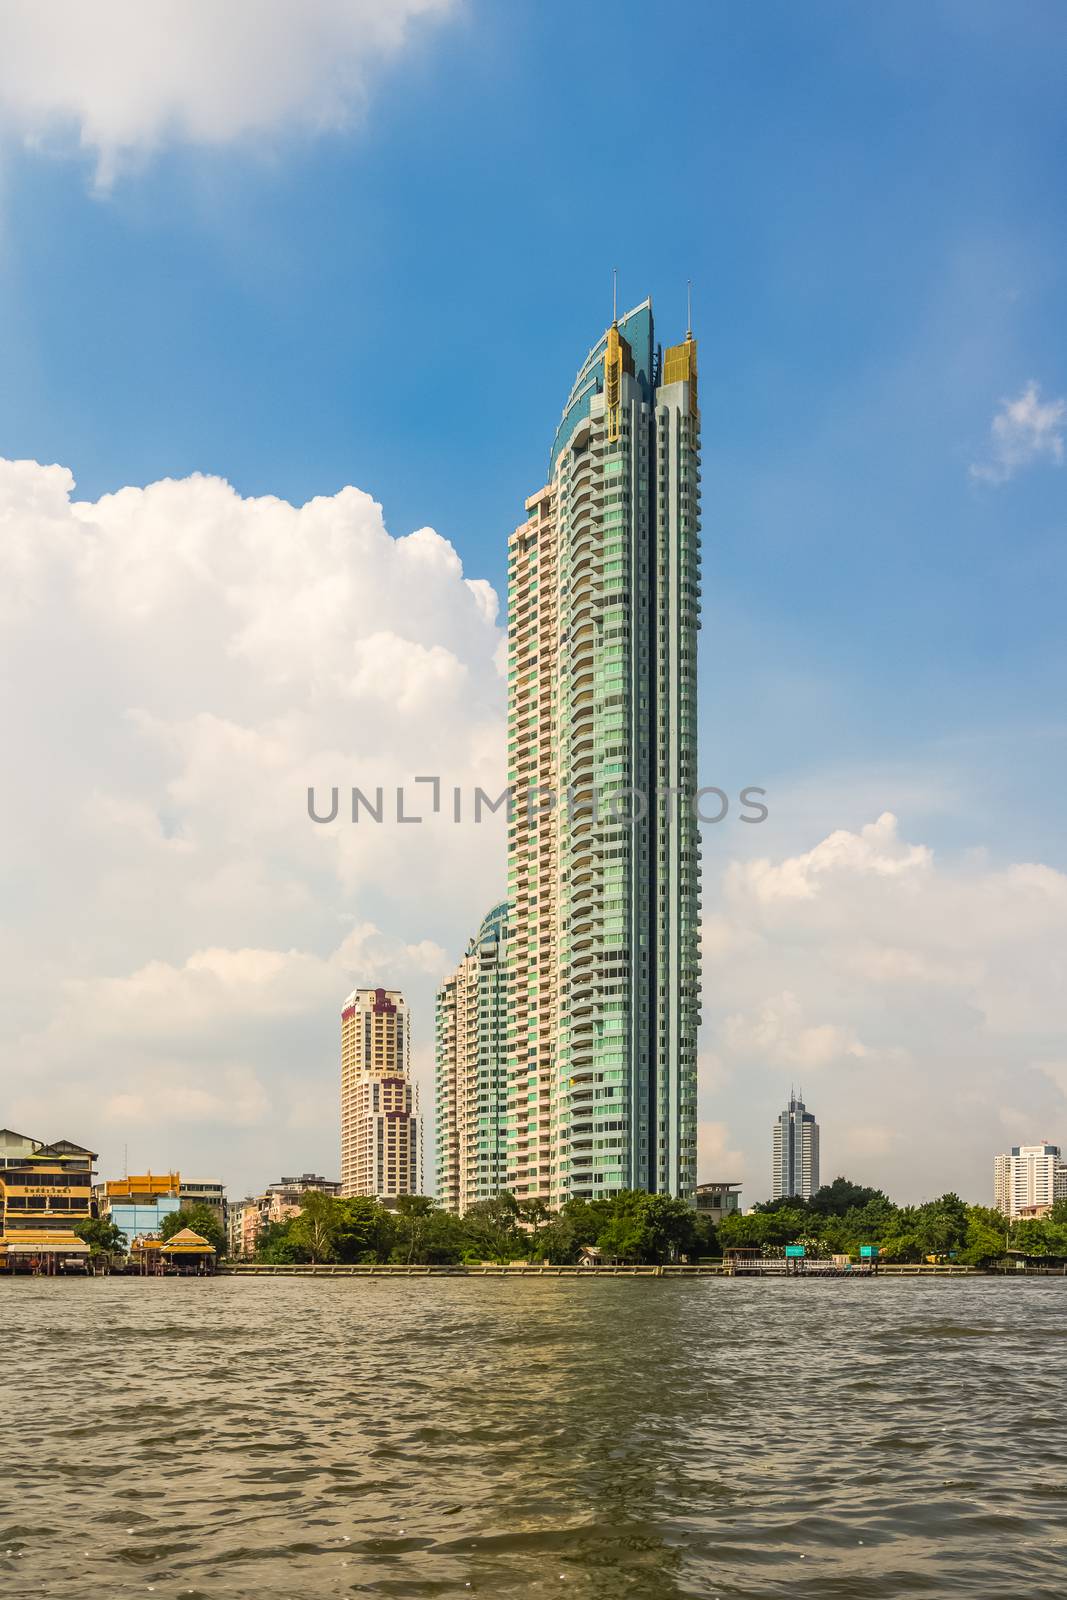 Watermark Chaophraya River condominium by pawel_szczepanski